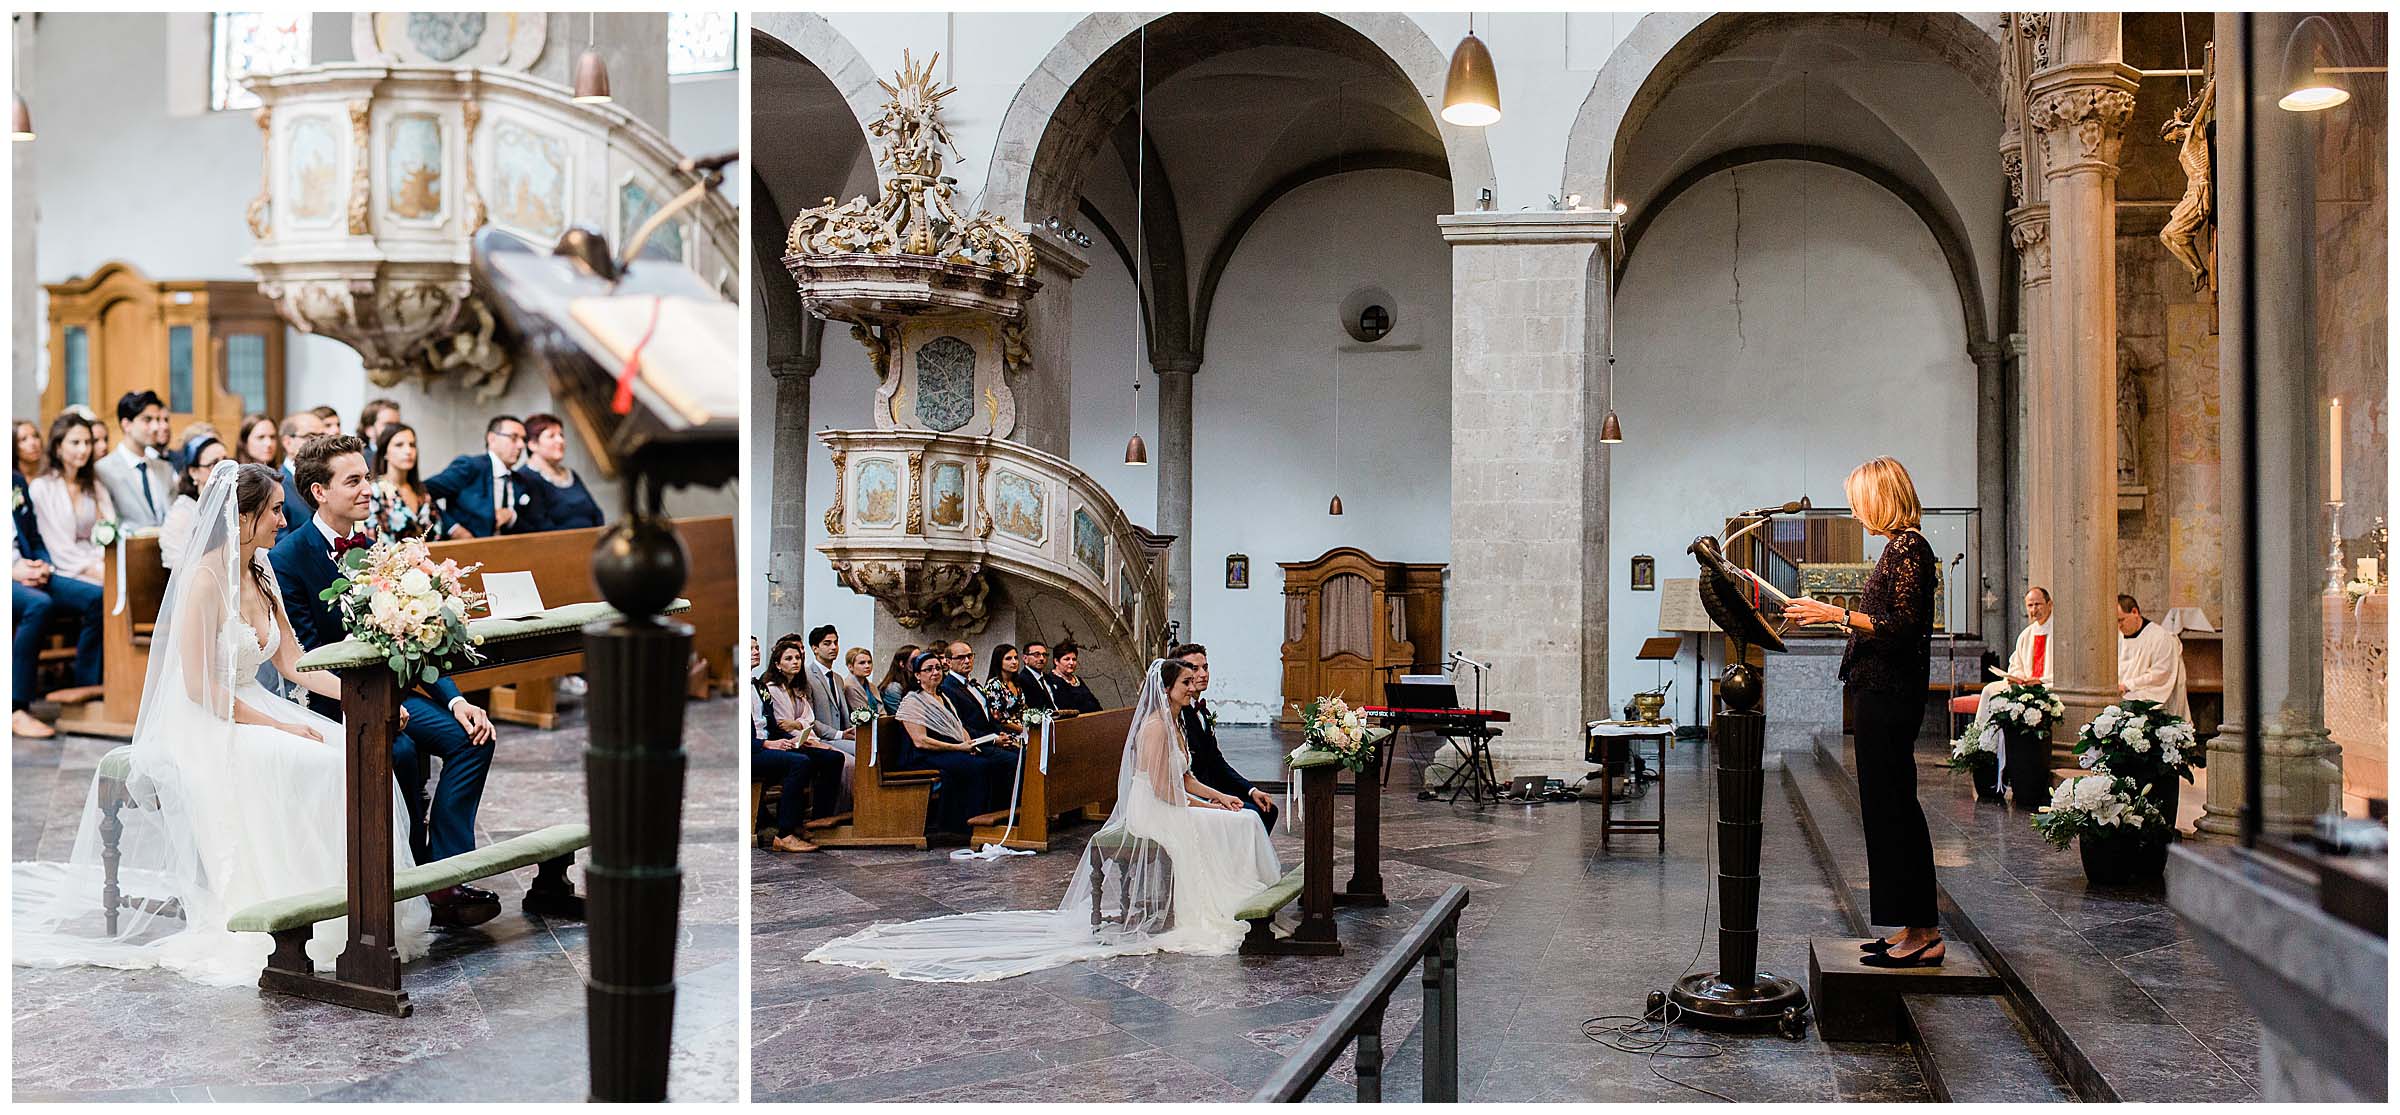 St Pantaleon Kirche Koeln Hochzeit